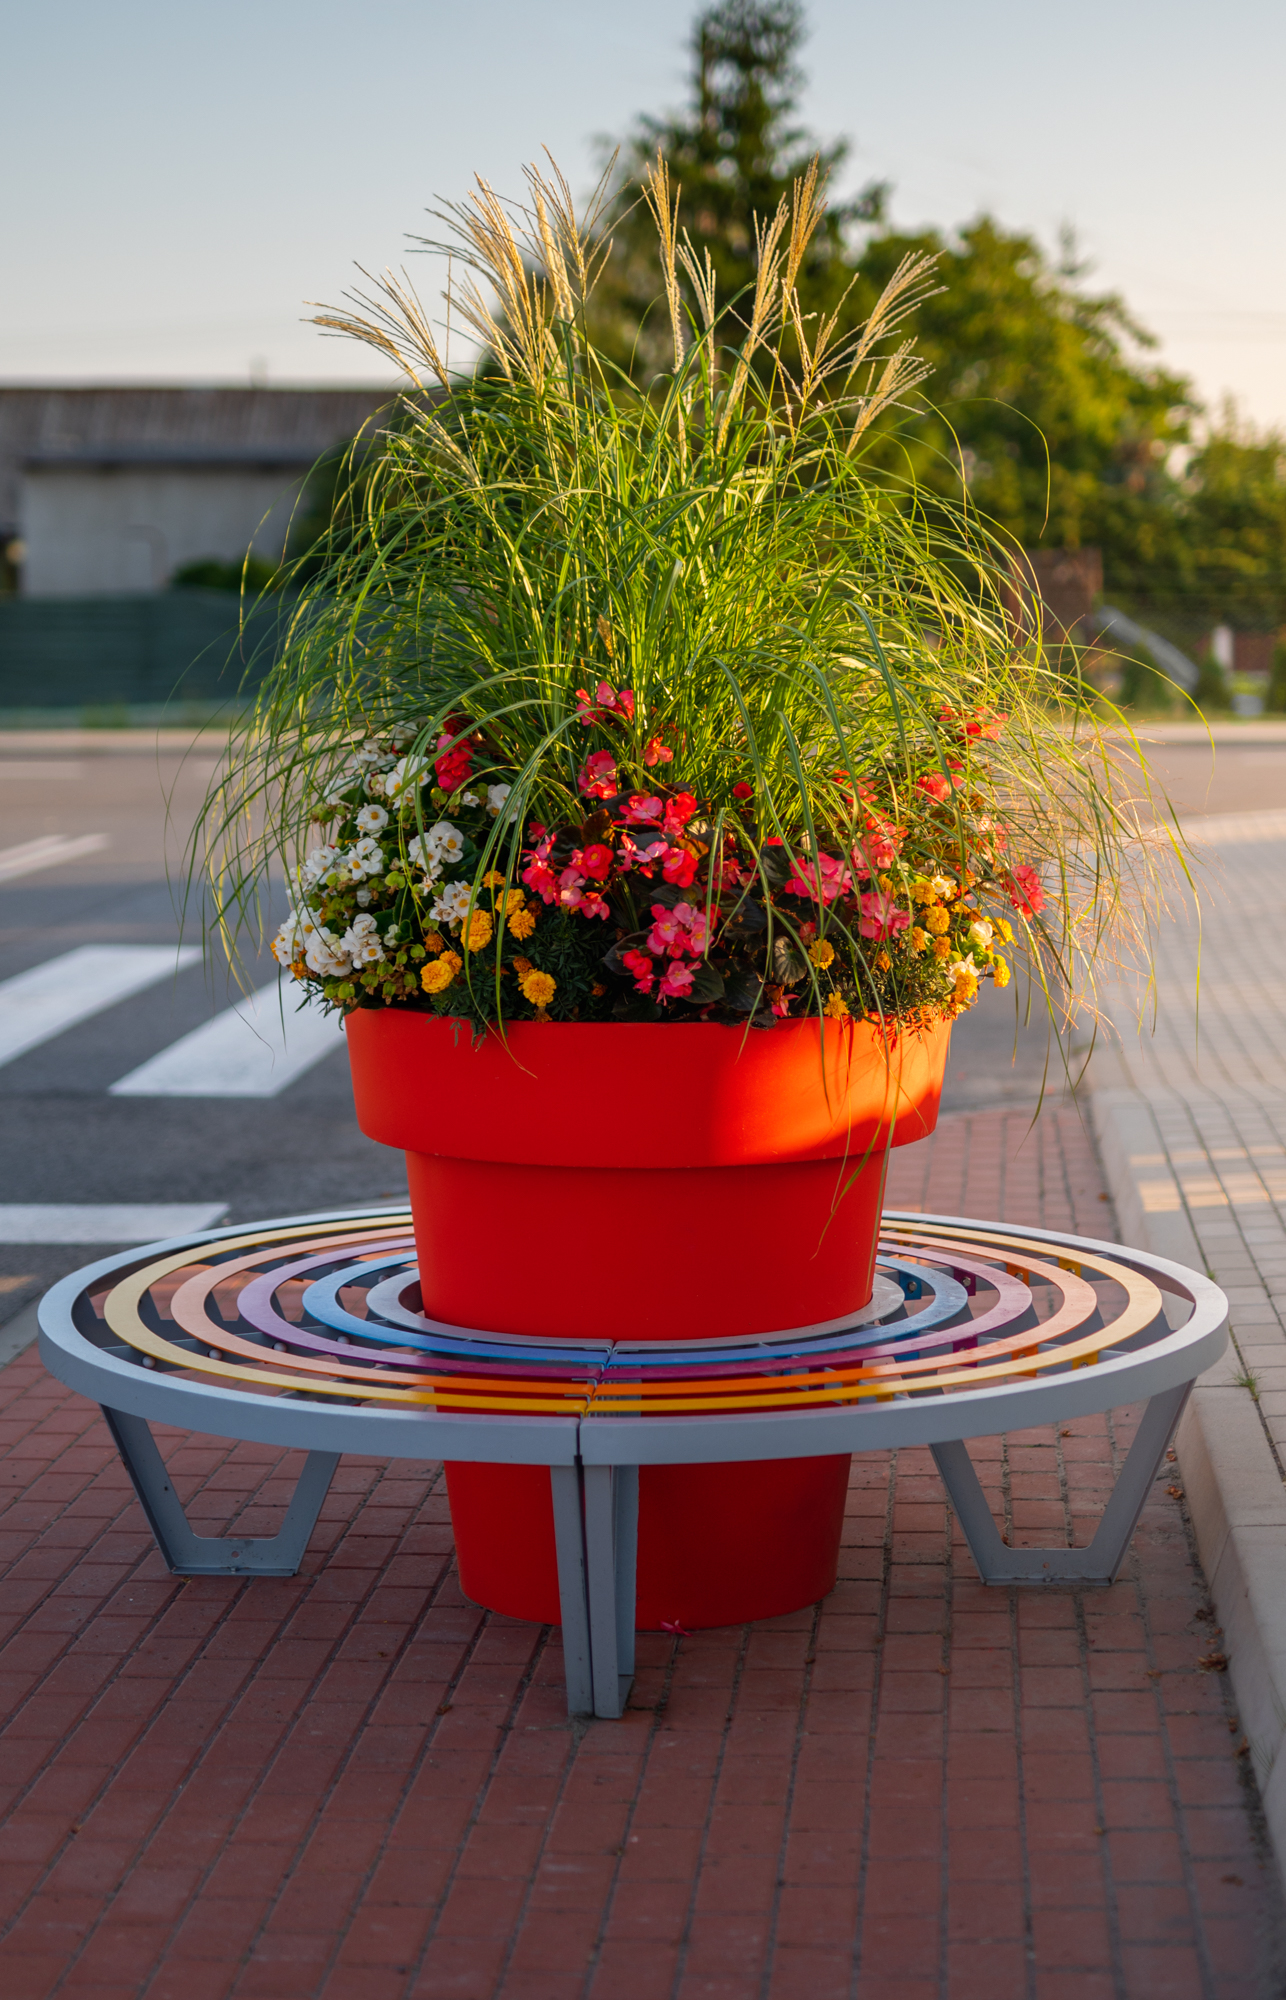 flowers-in-pot-nadnotecka-street-Labiszyn-Zebra-bench (4)